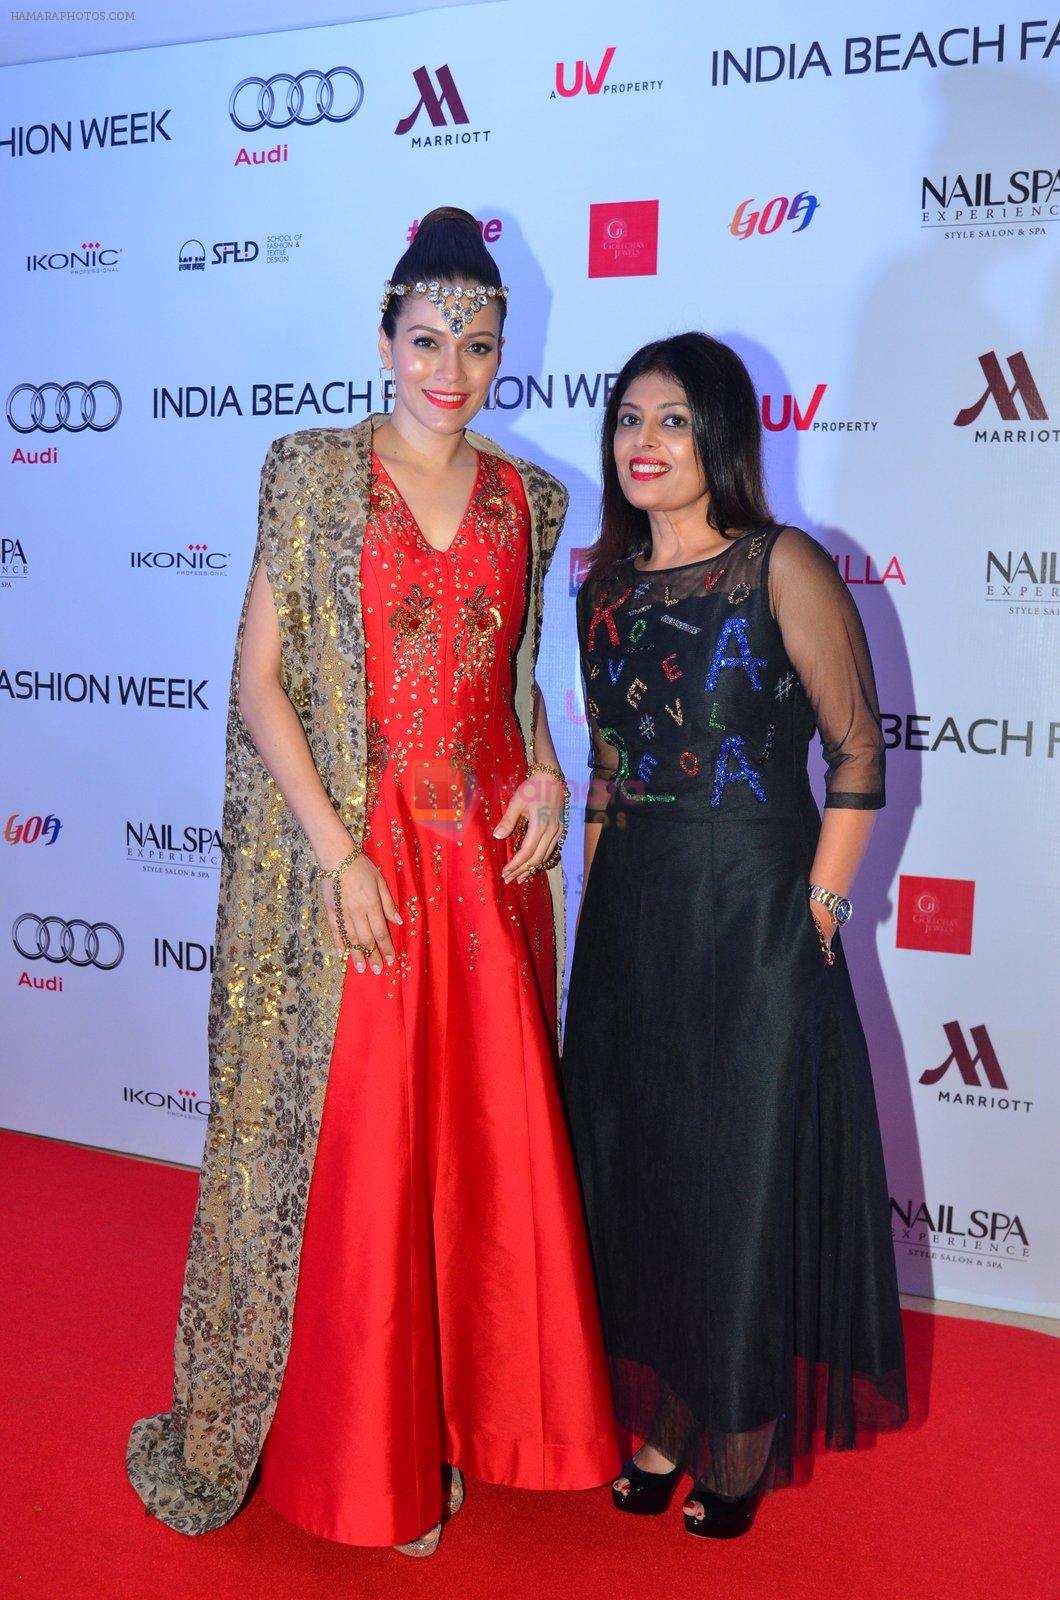 Waluscha D'souza at India Beach Fashion Week in Goa on 23rd May 2016